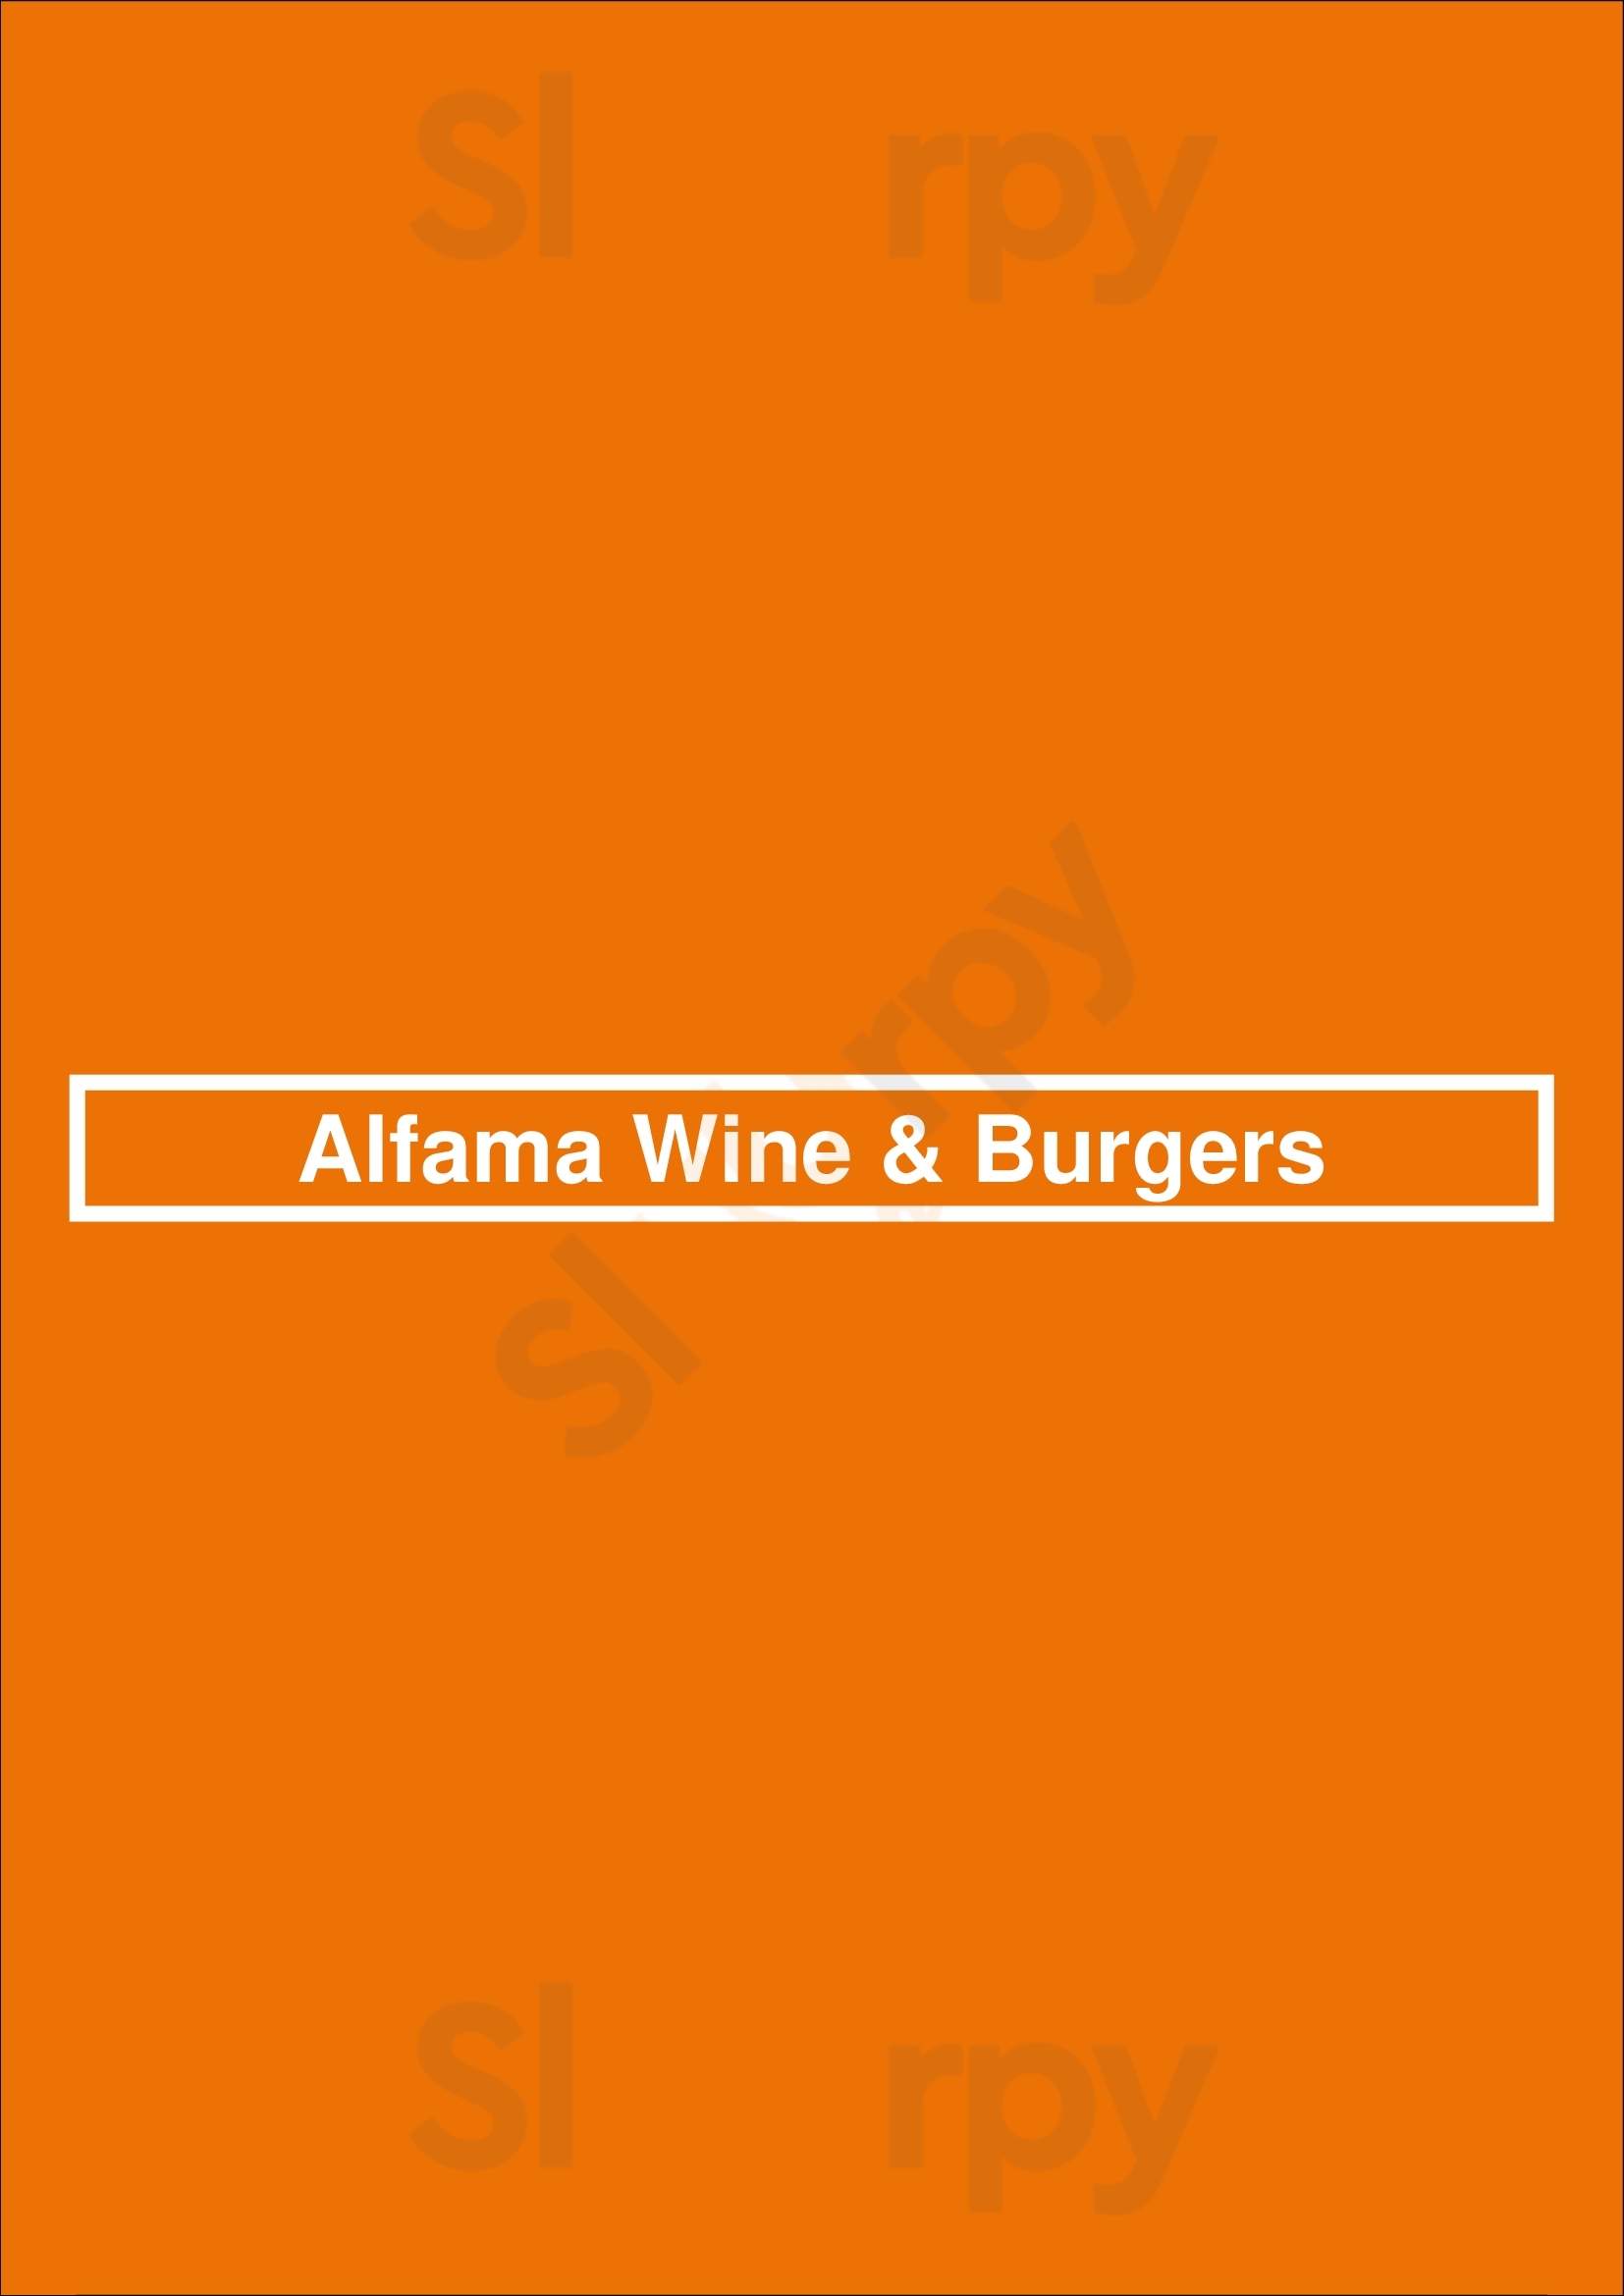 Alfama Wine & Burgers Lisboa Menu - 1